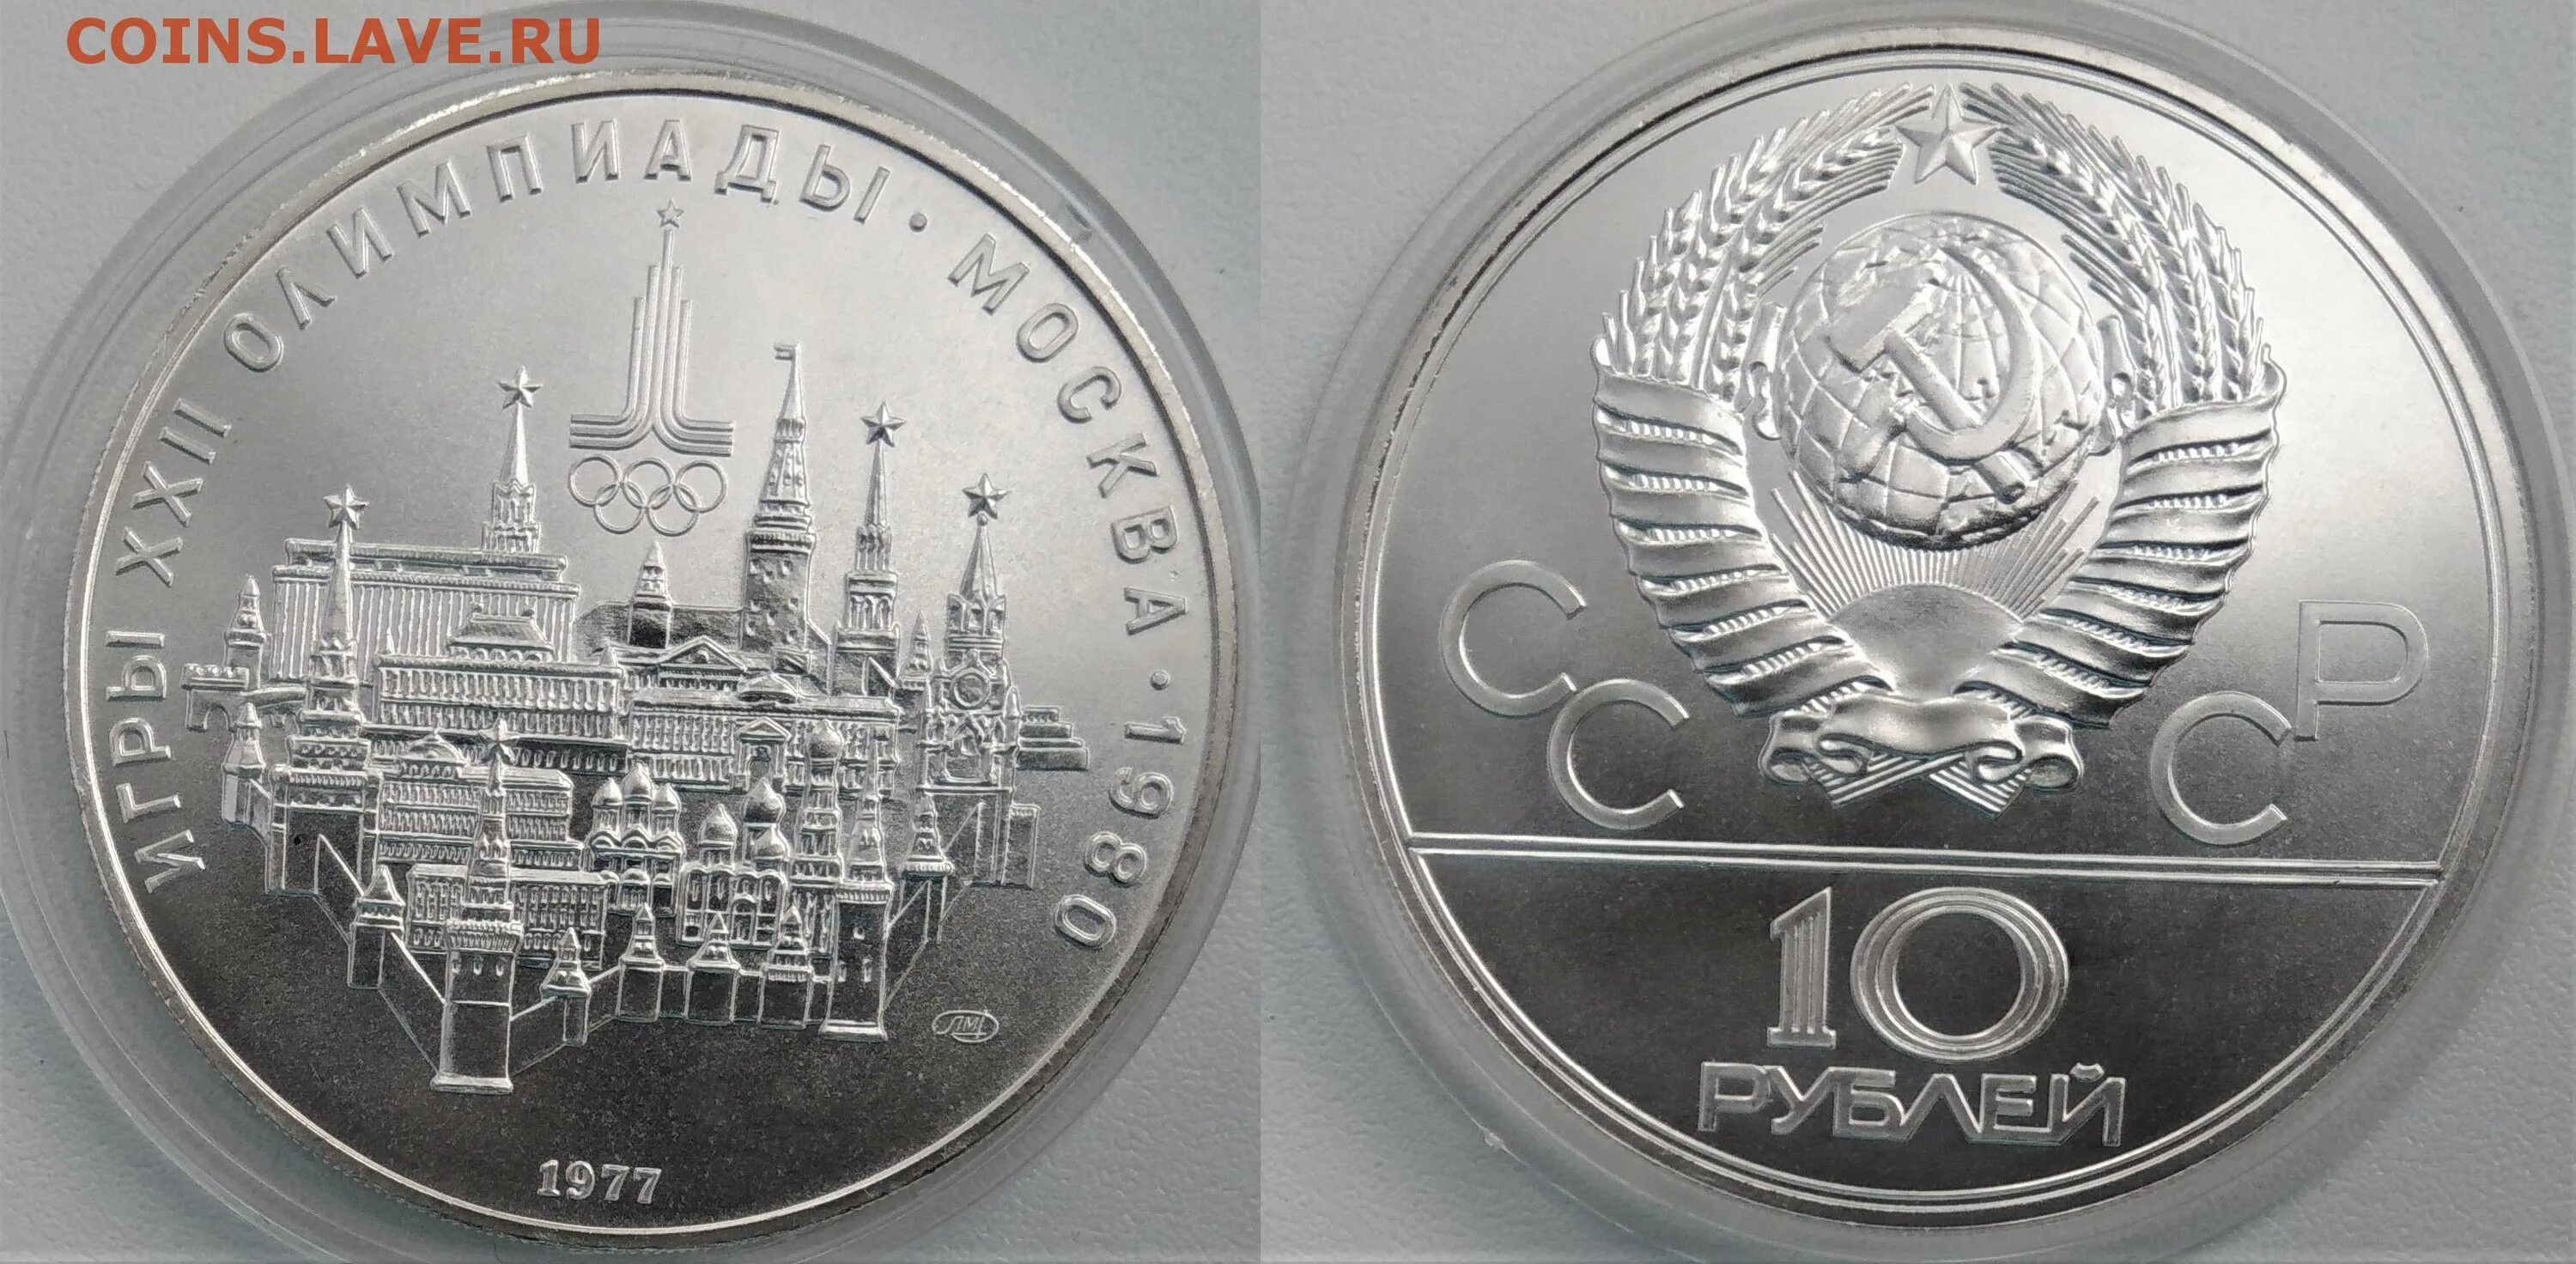 10 Рублей 1977 Москва. Двести рублей монета. Рубли в Москве.